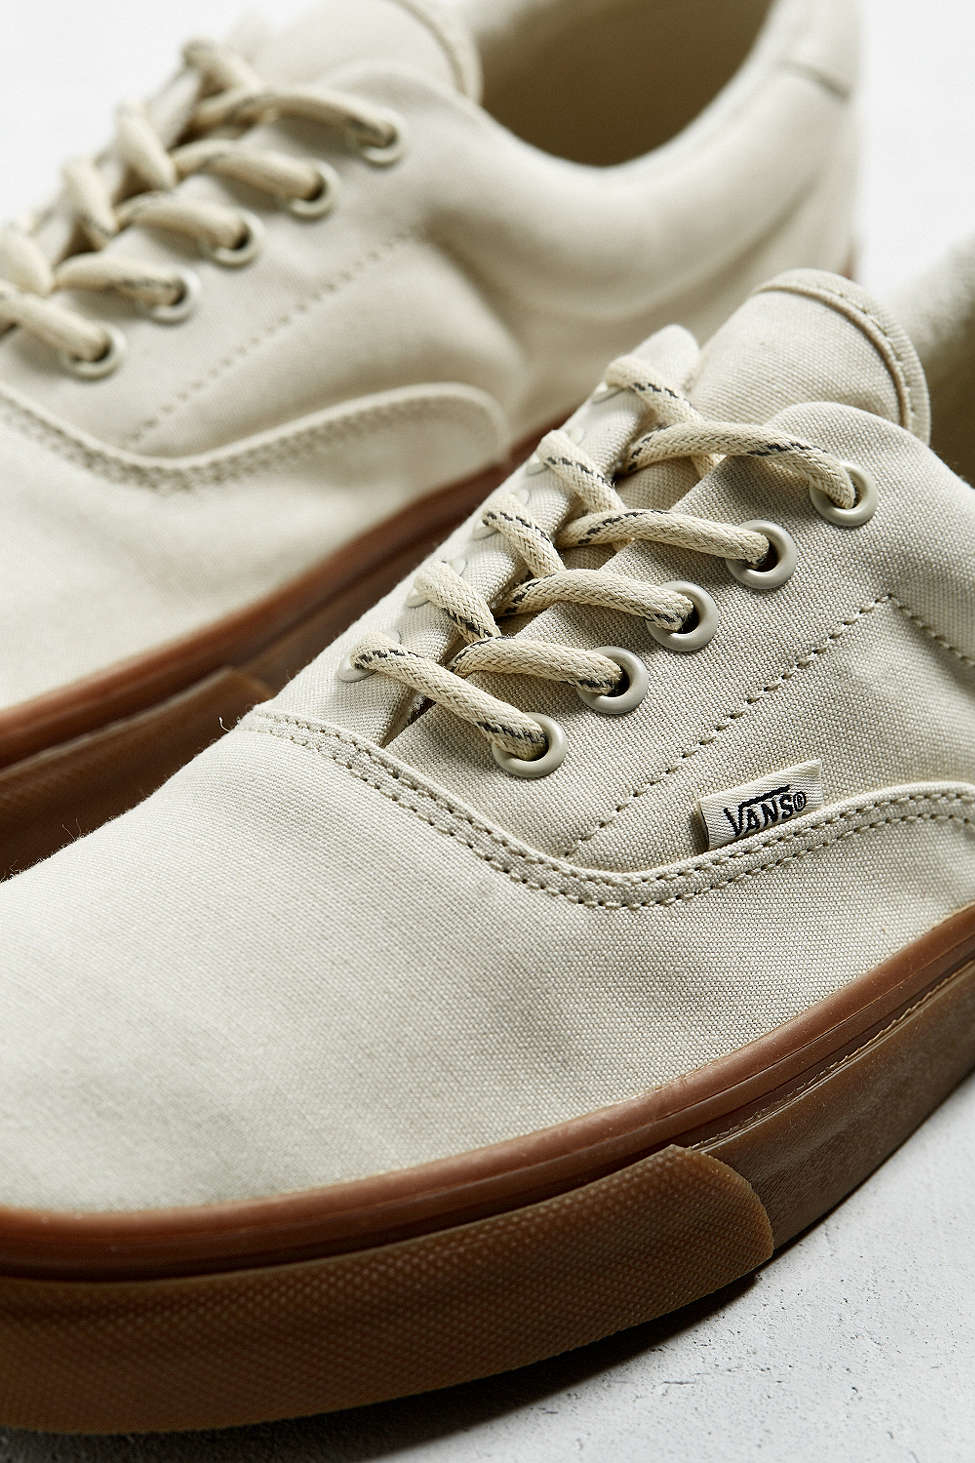 Vans Cotton 59 Hiking Gum Sole Sneaker in White for Men - Lyst